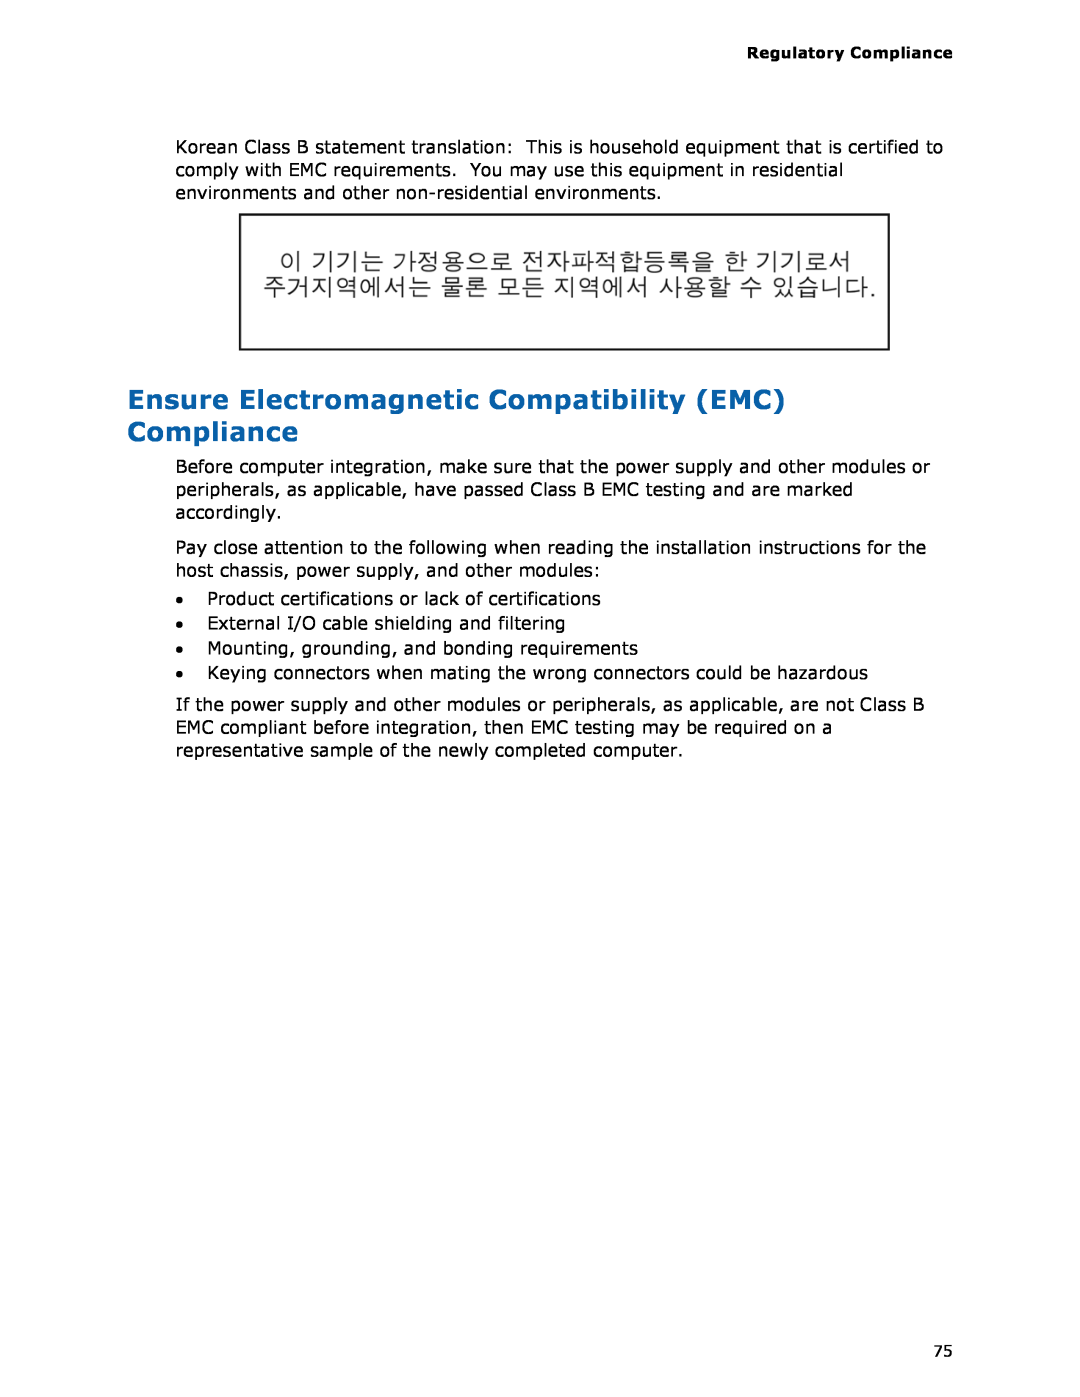 Intel BLKDH57JG manual Ensure Electromagnetic Compatibility EMC Compliance 